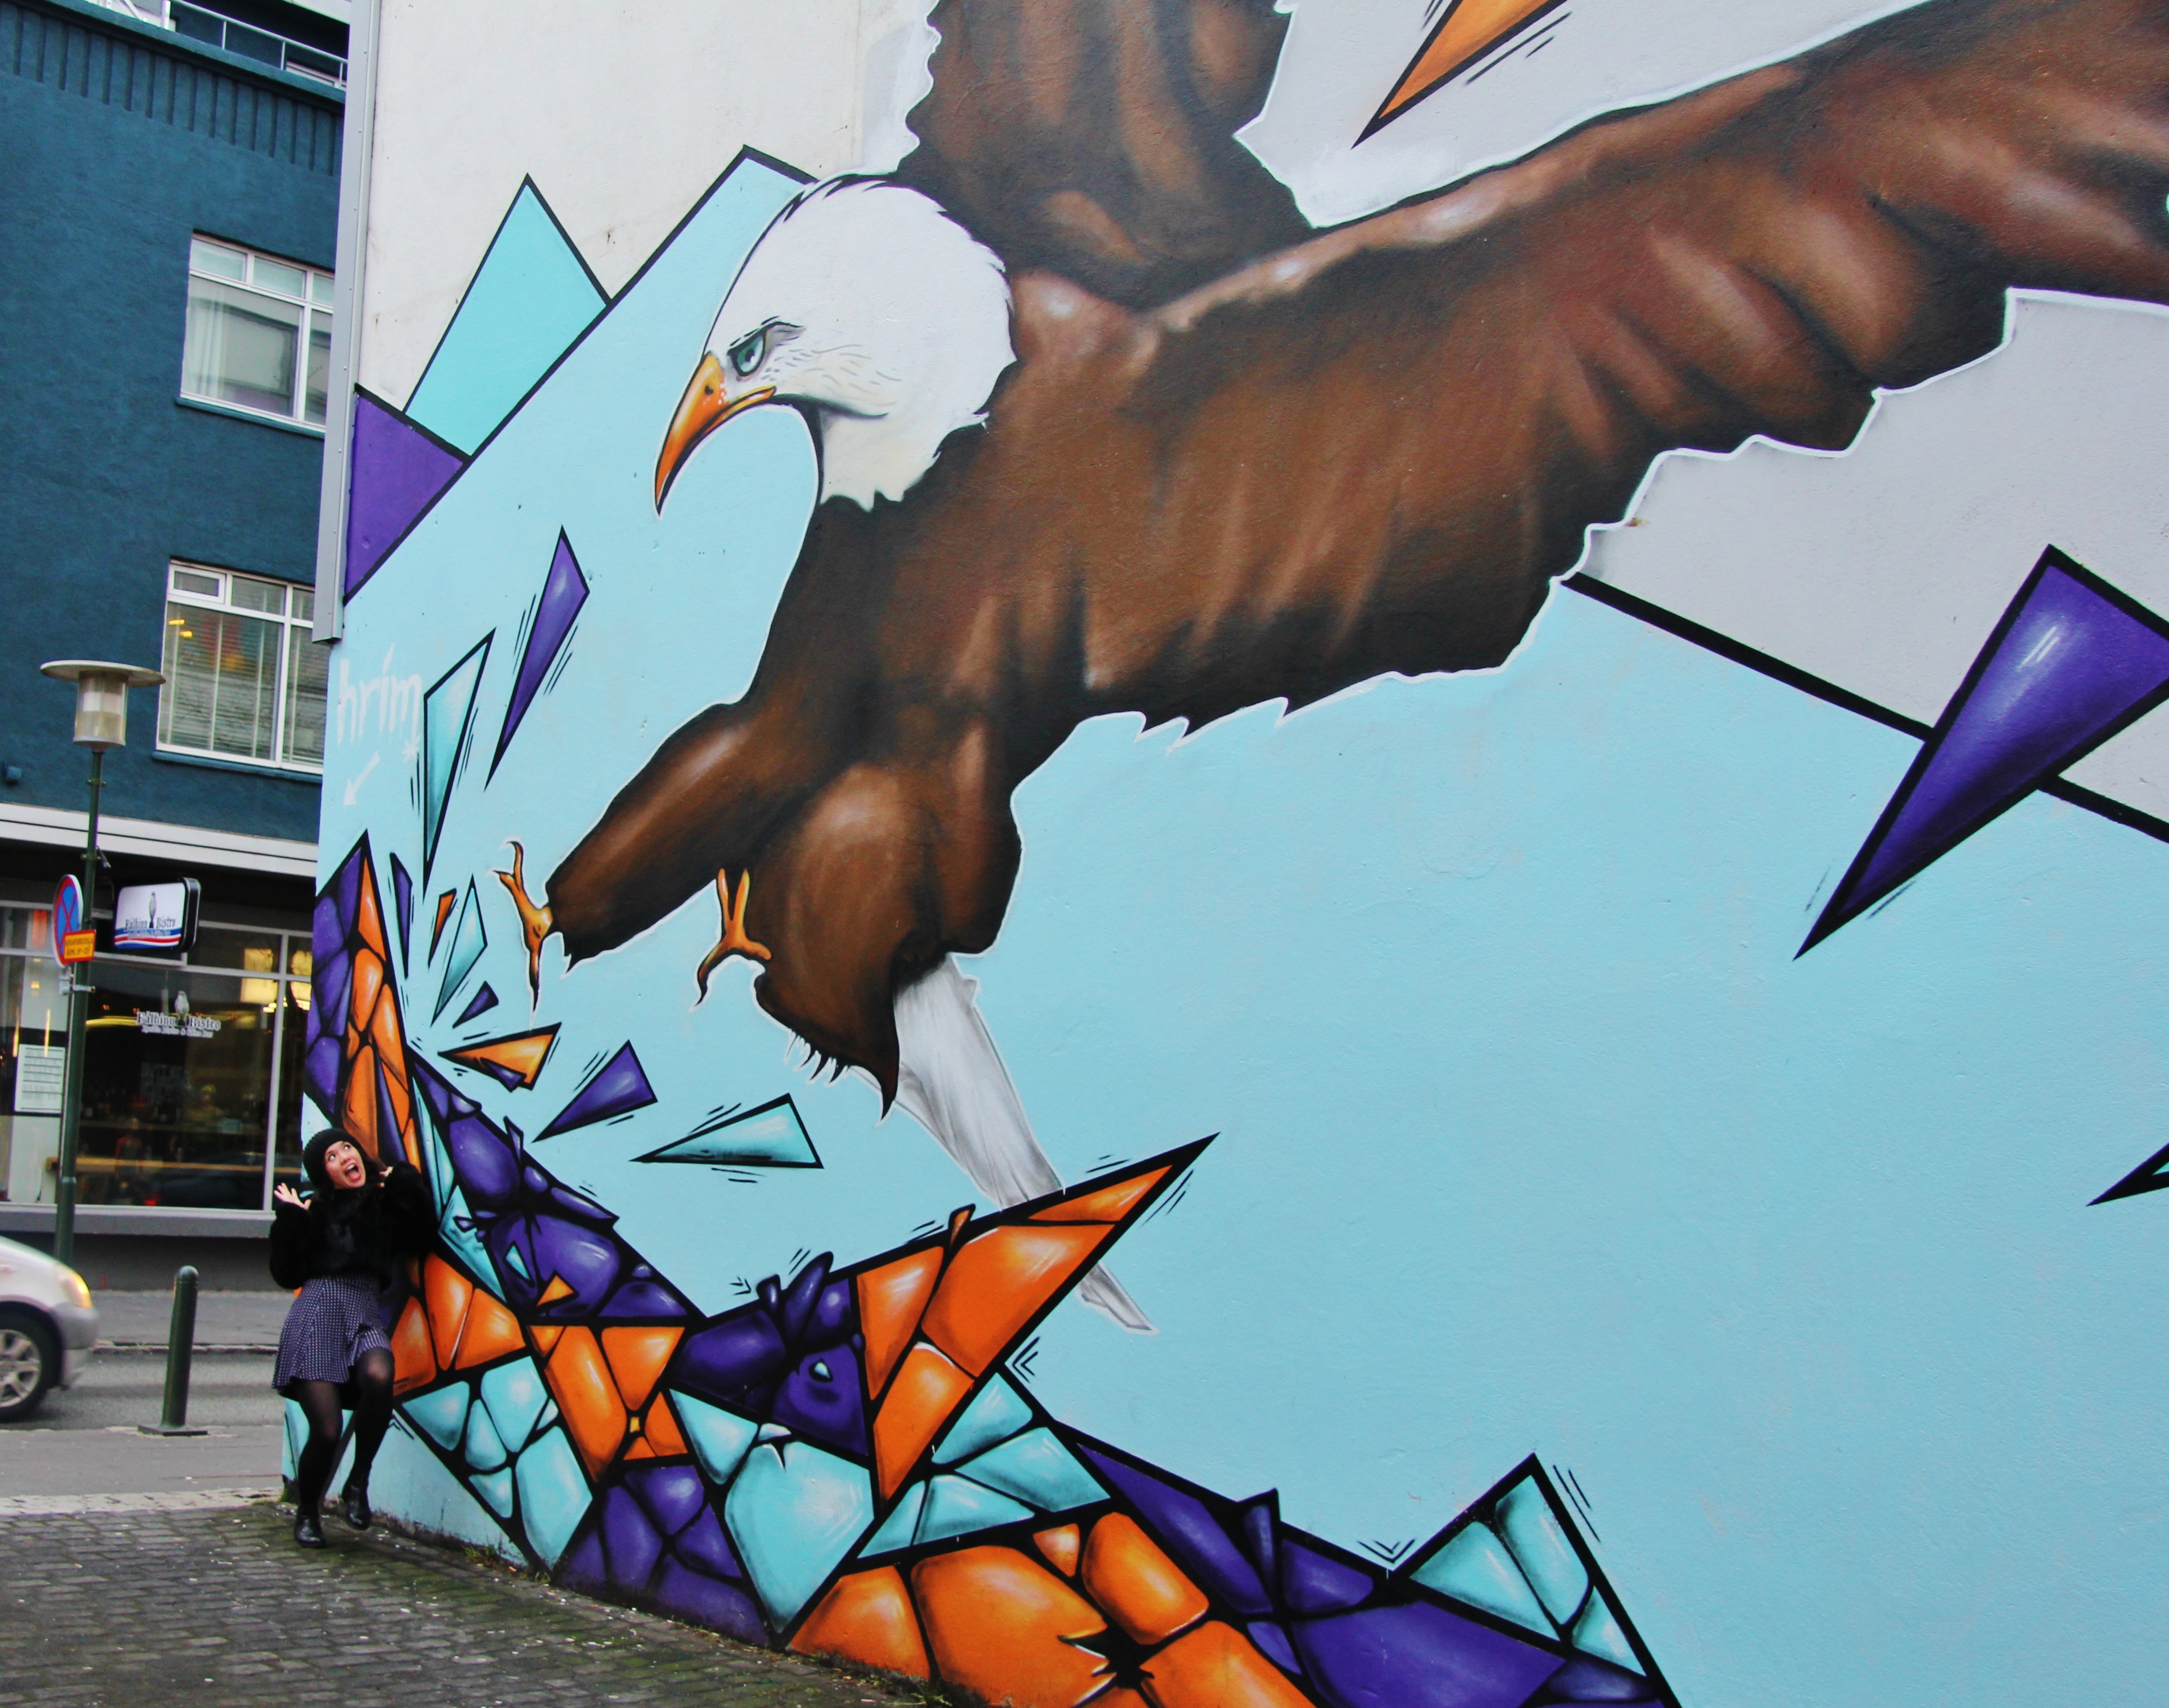 Bird, street art in Reykjavik